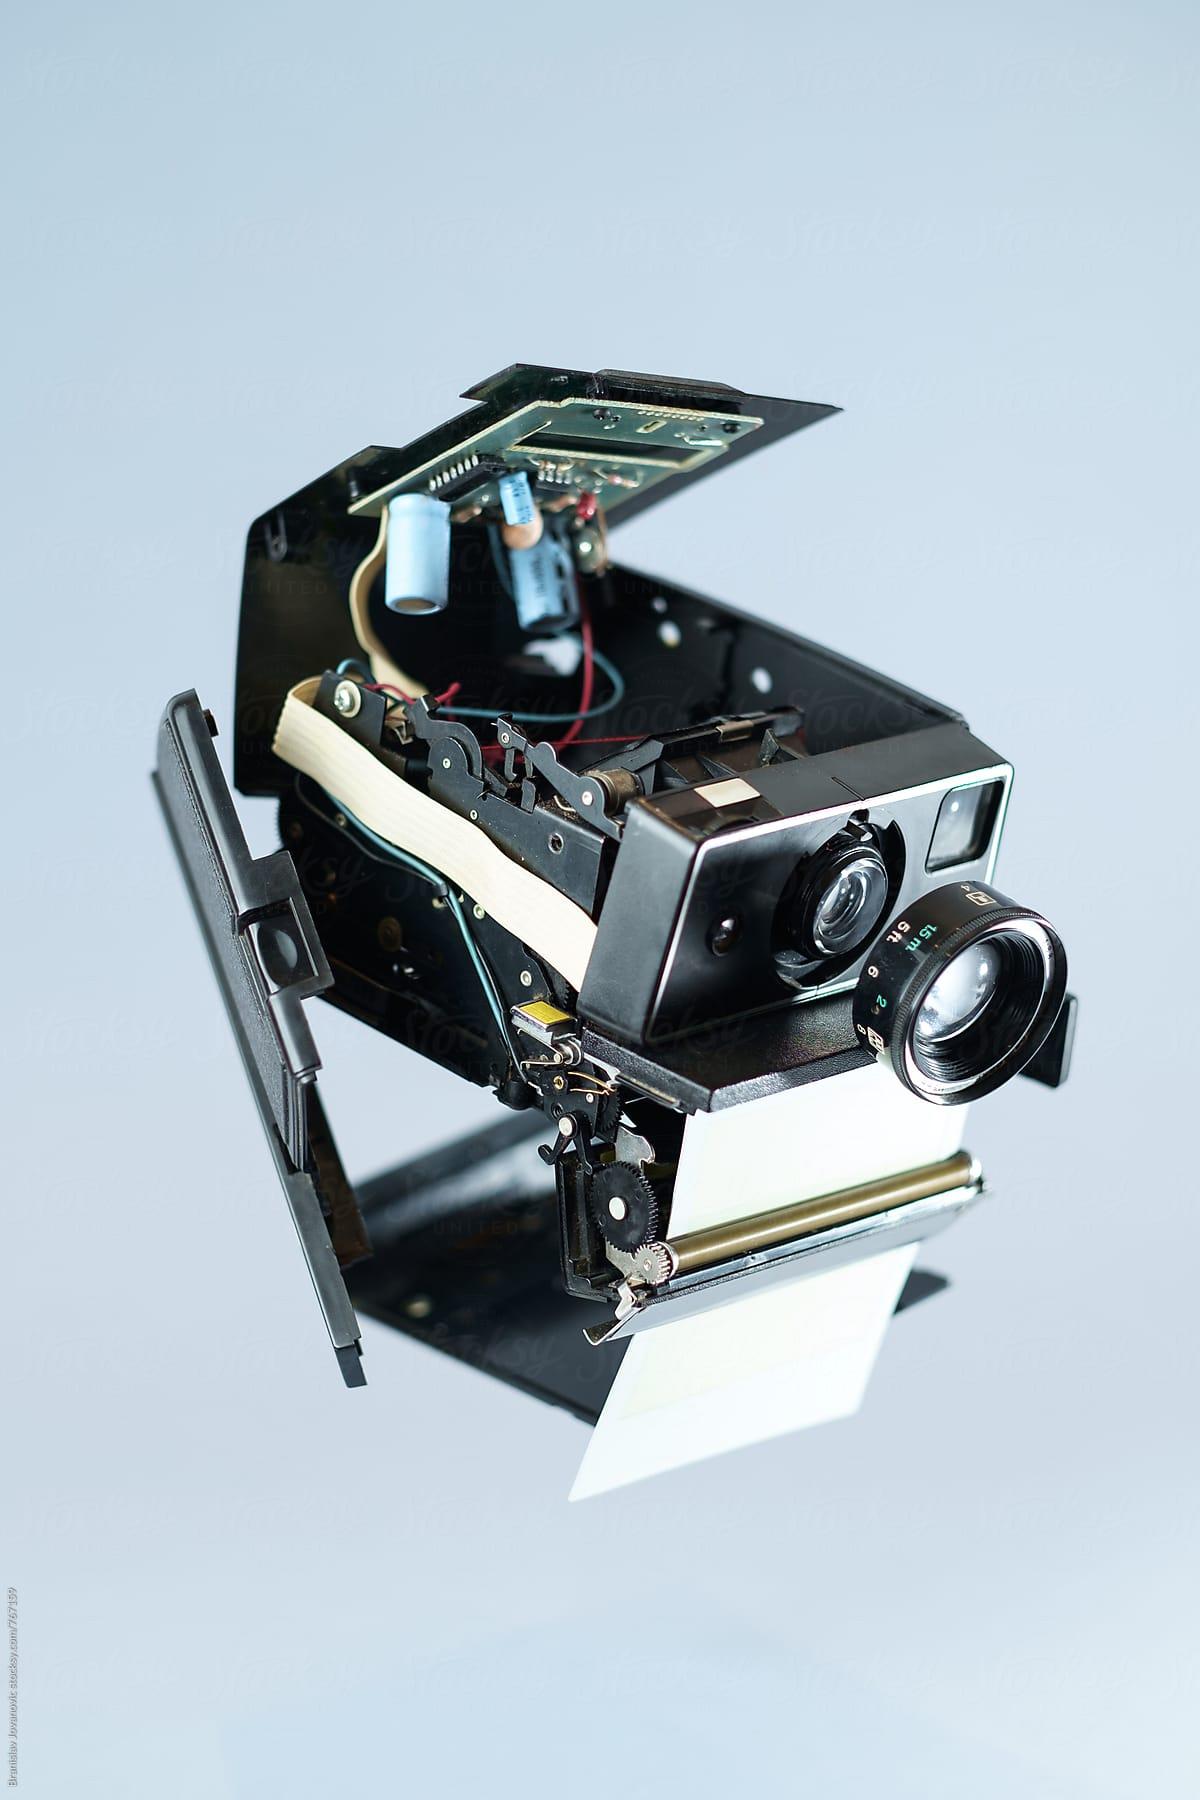 Disassembled Old Polaroid Camera Floating